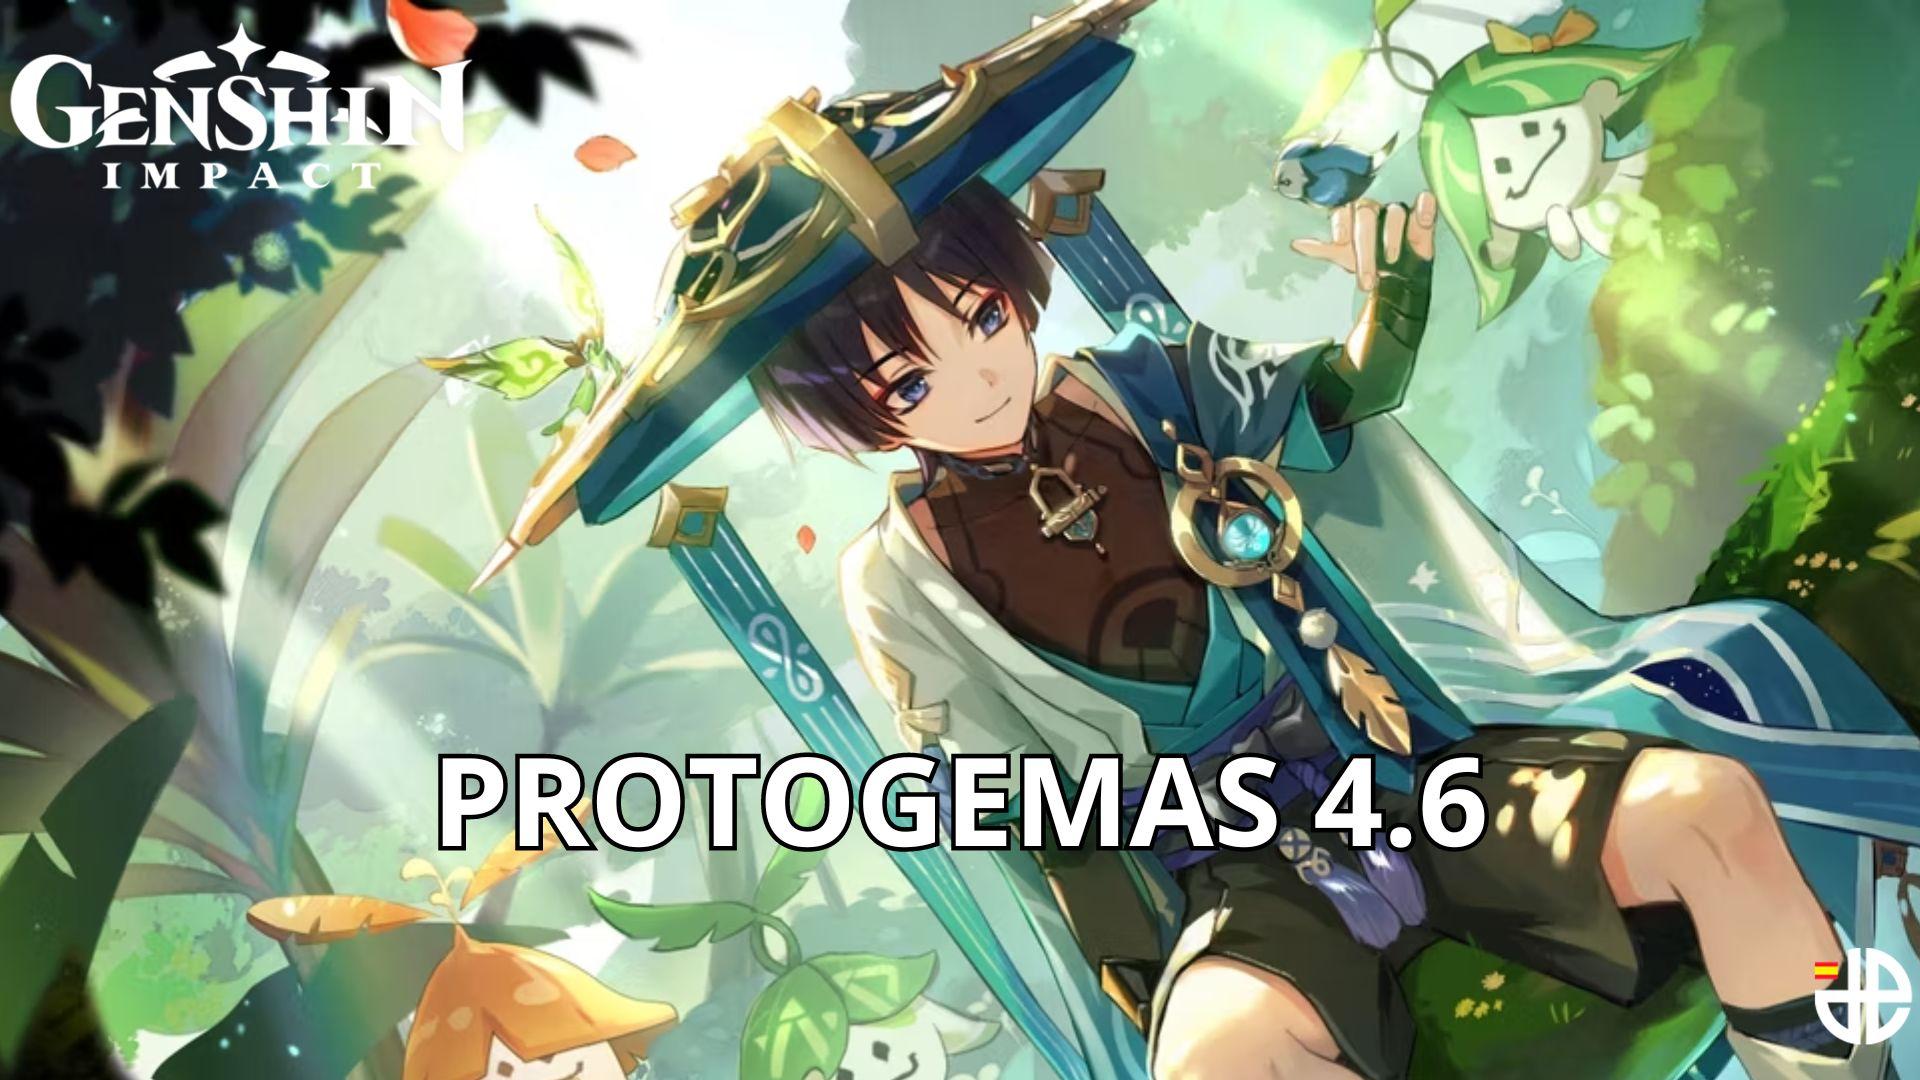 Genshin protogemas 4.6